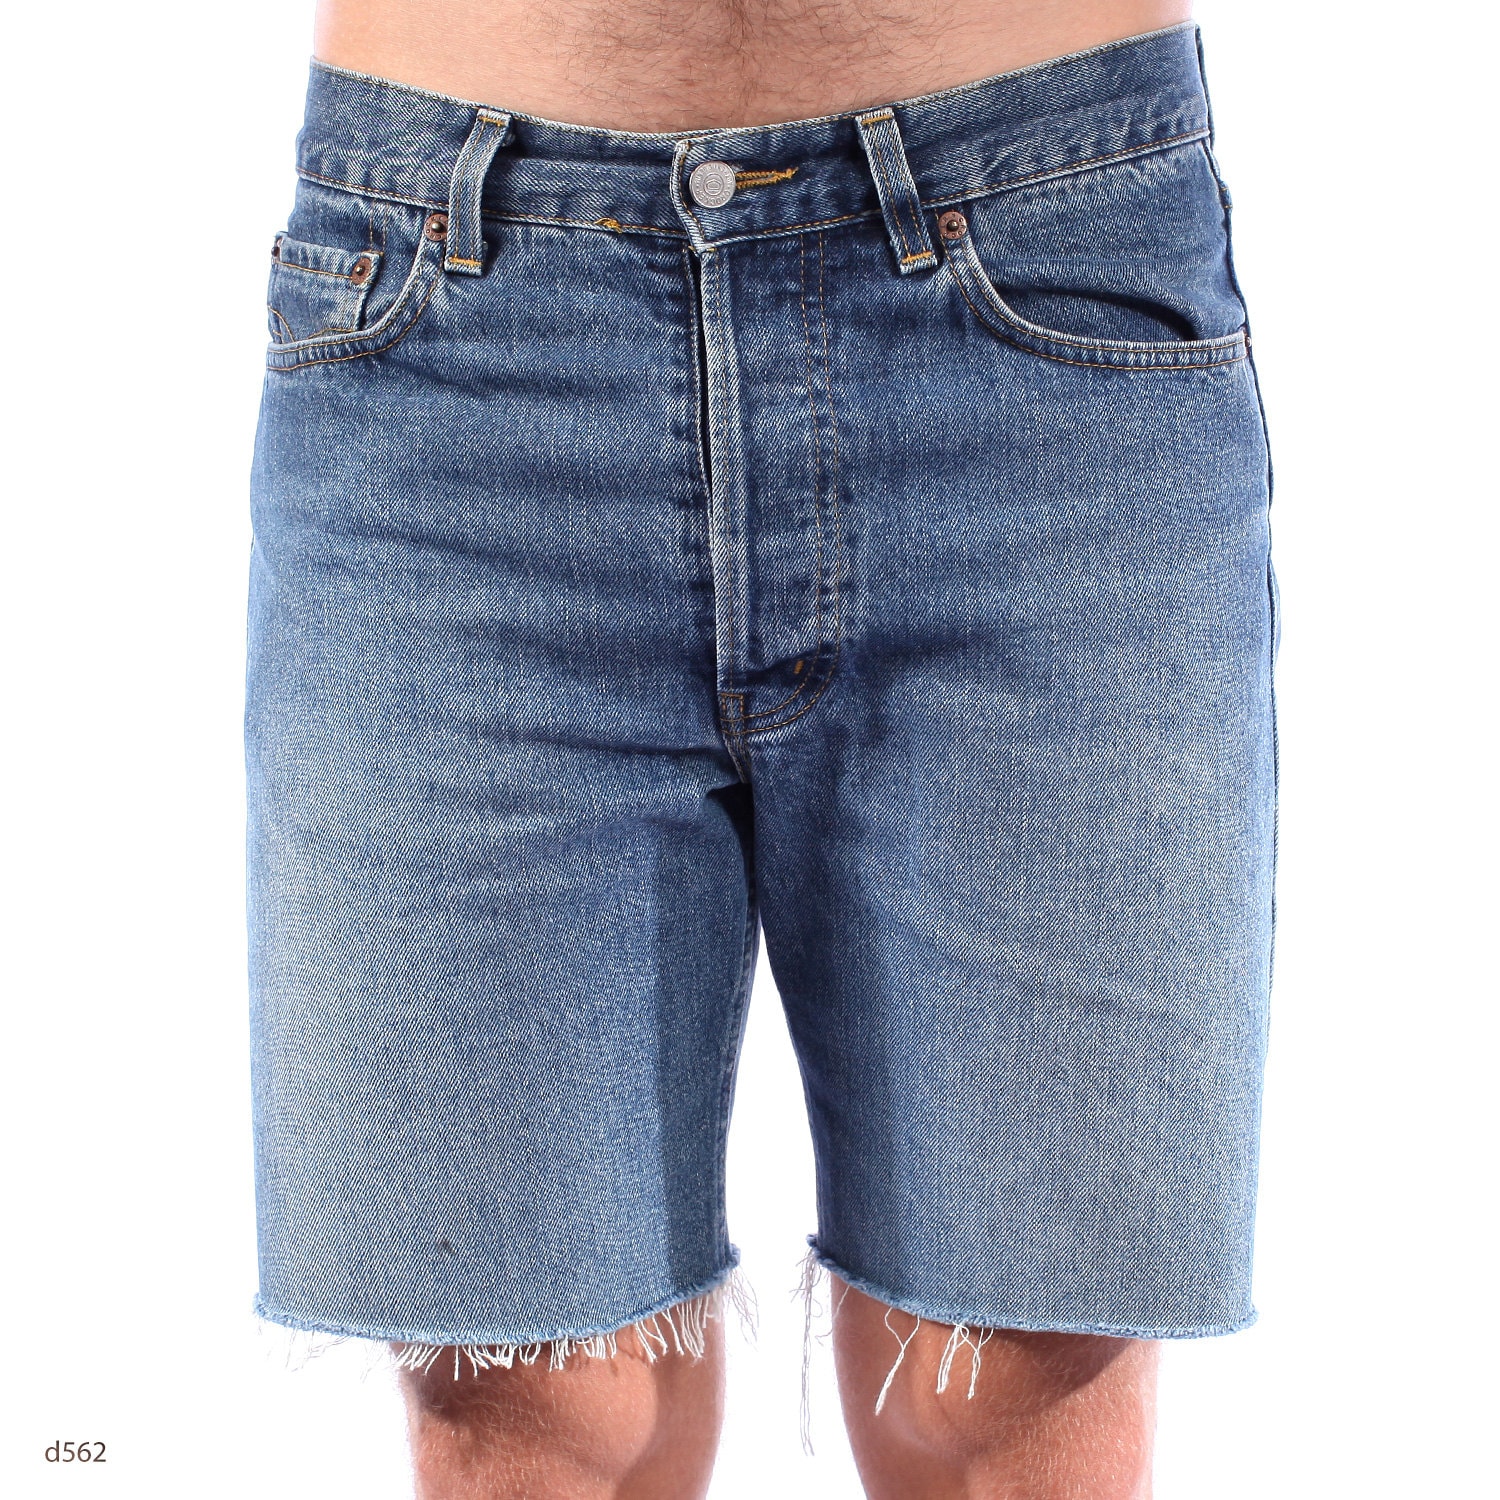 Men Shorts / 80s Denim Shorts for Men / Medium / by BetaMenswear